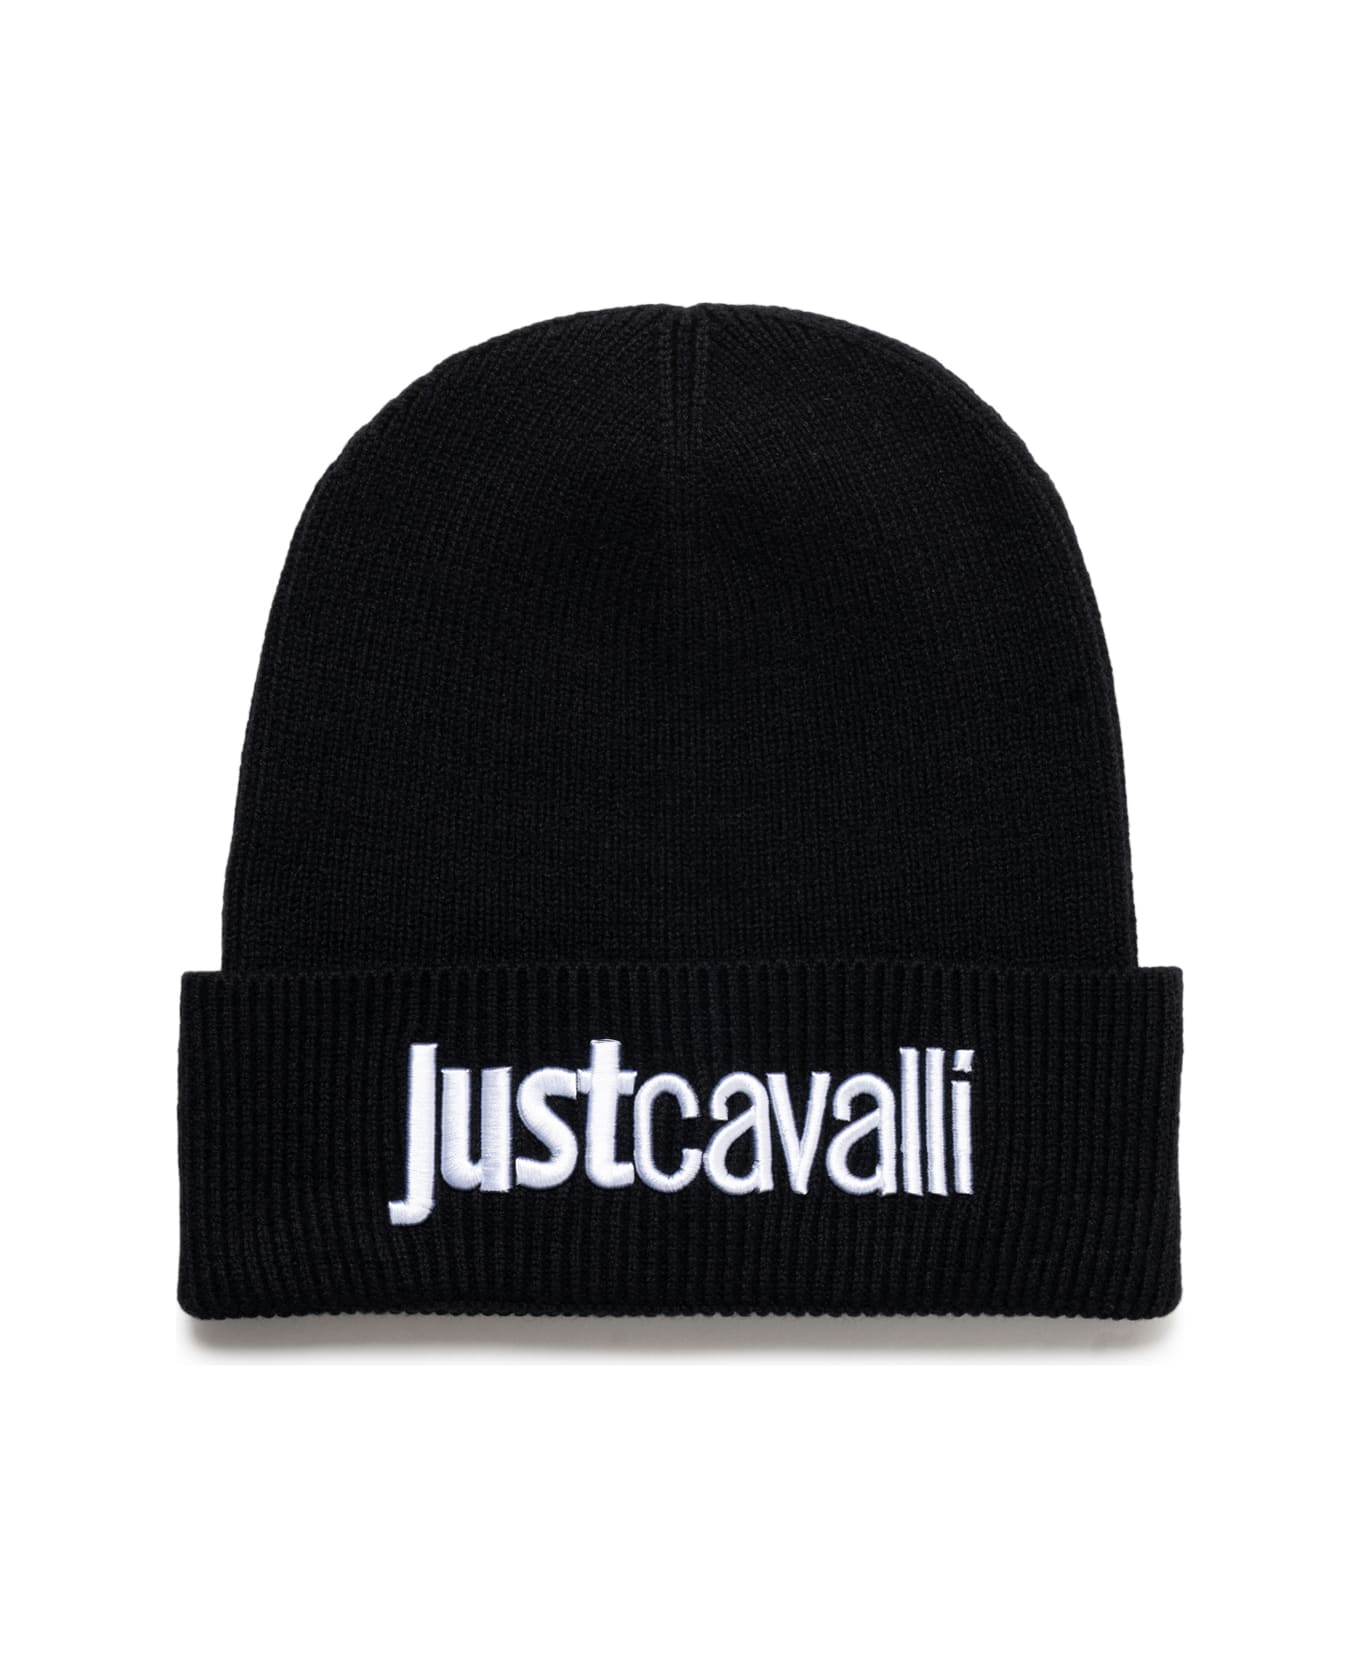 Just Cavalli Hats Black - Black